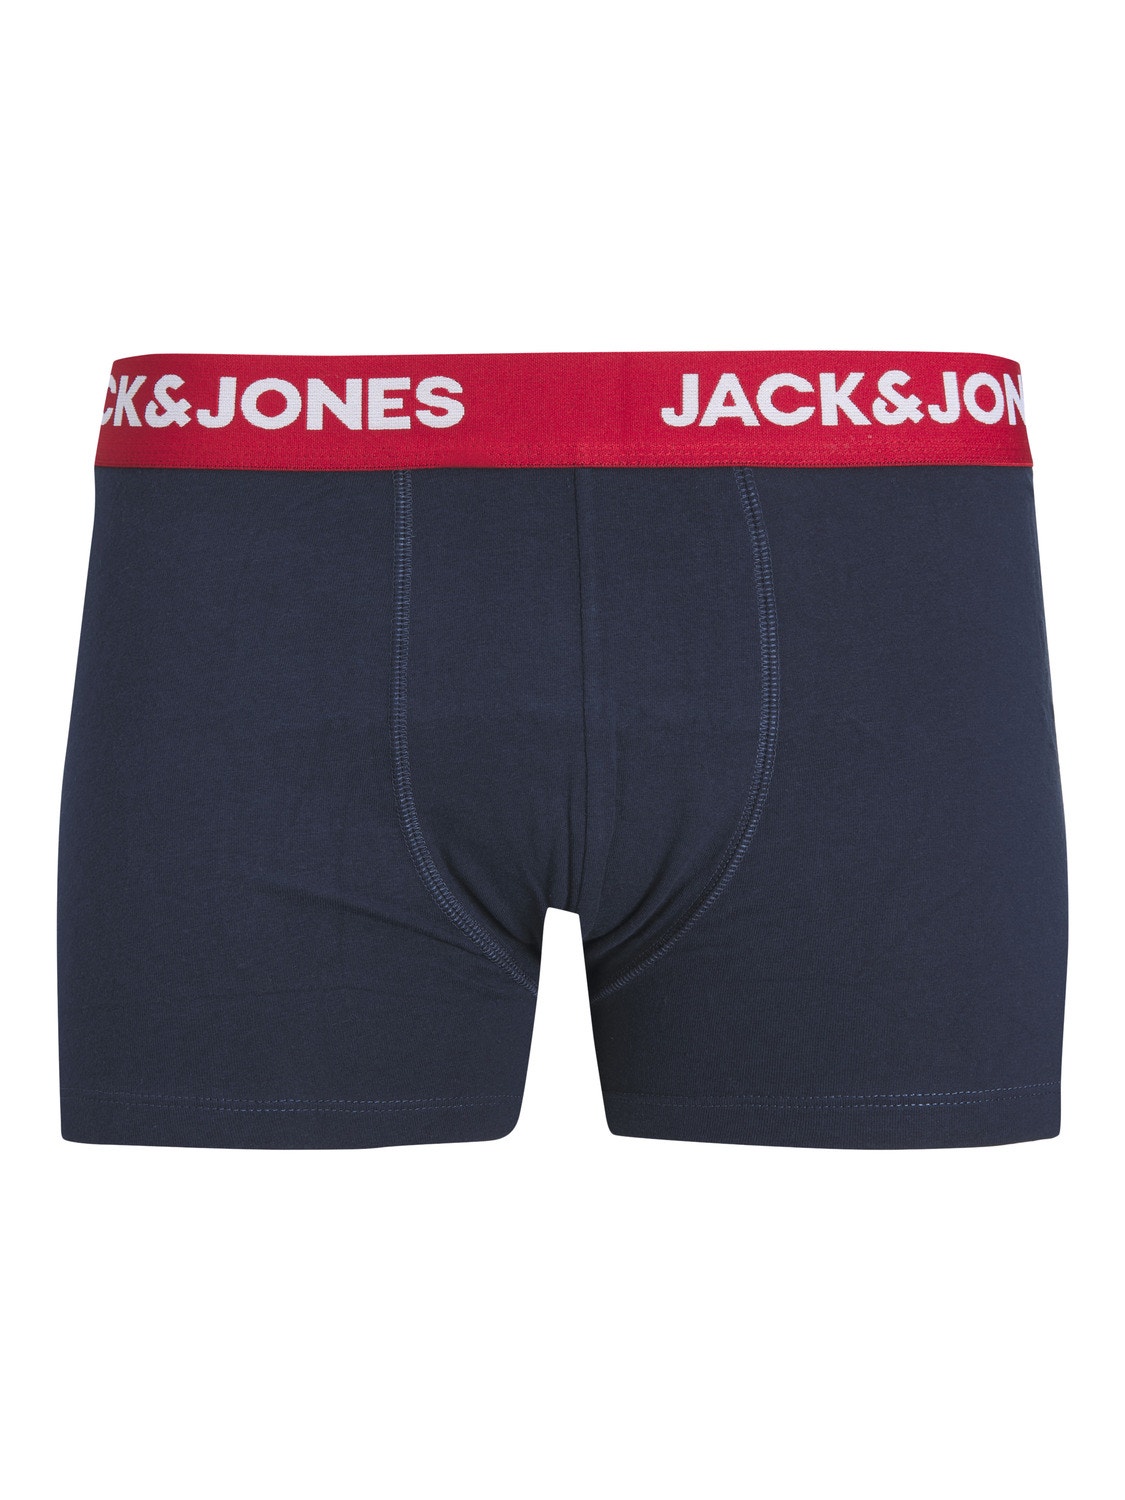 Jack & Jones Plus Size 5-pack Trunks -Navy Blazer - 12240285